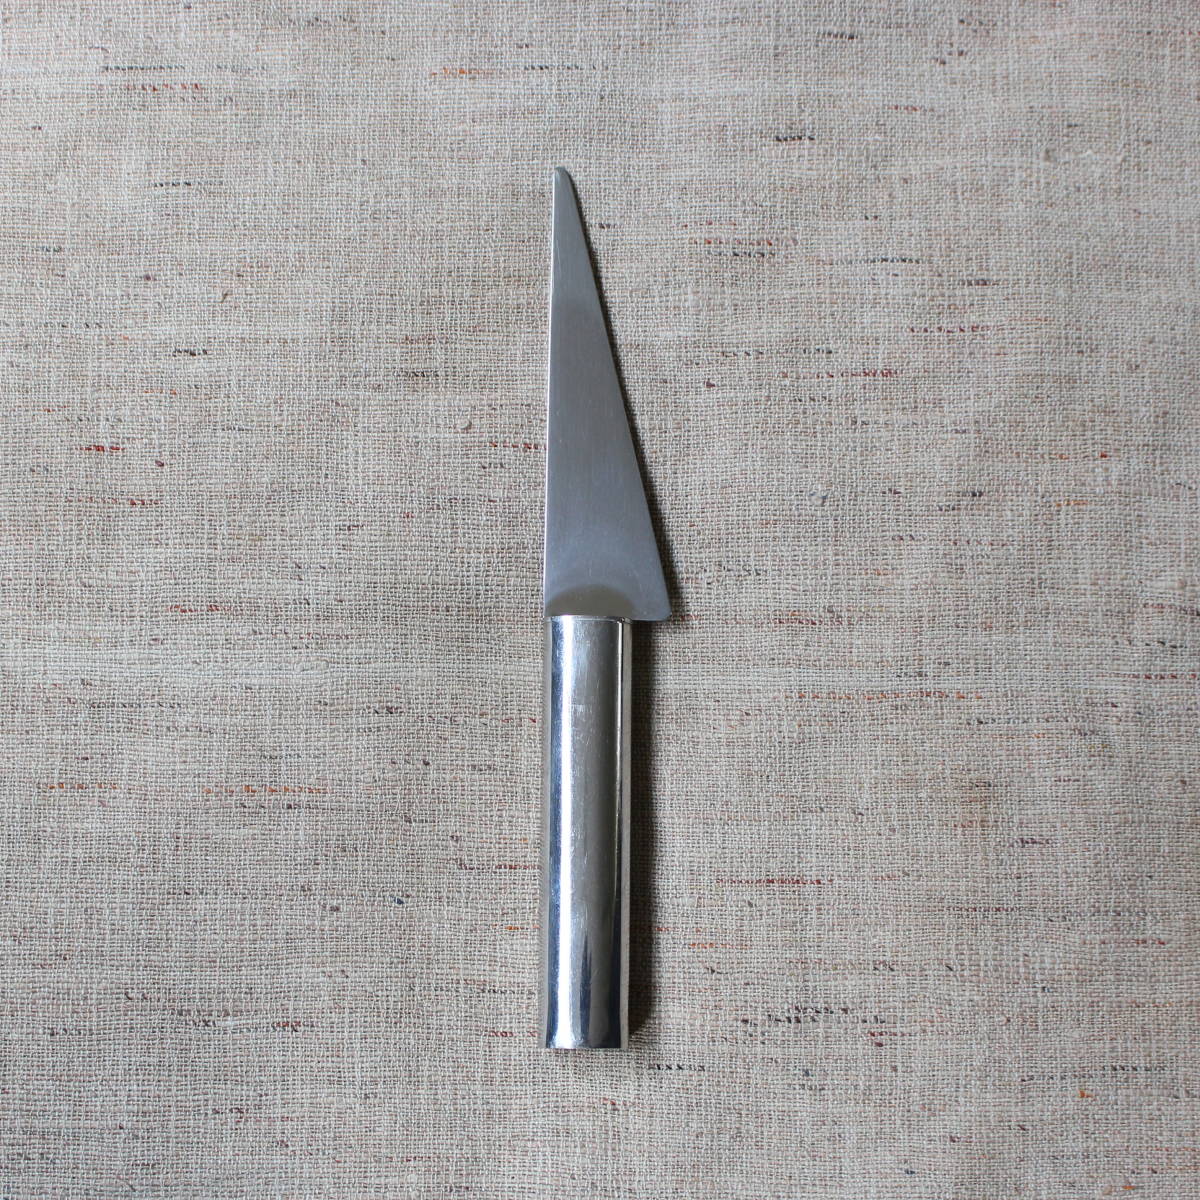 1970-80s редкость Boda Nova Oval Cheese Knife MOMA долгосрочный . магазин товар bow house Dieter Rams Vintage peli усилитель -ve сыр нож Северная Европа 